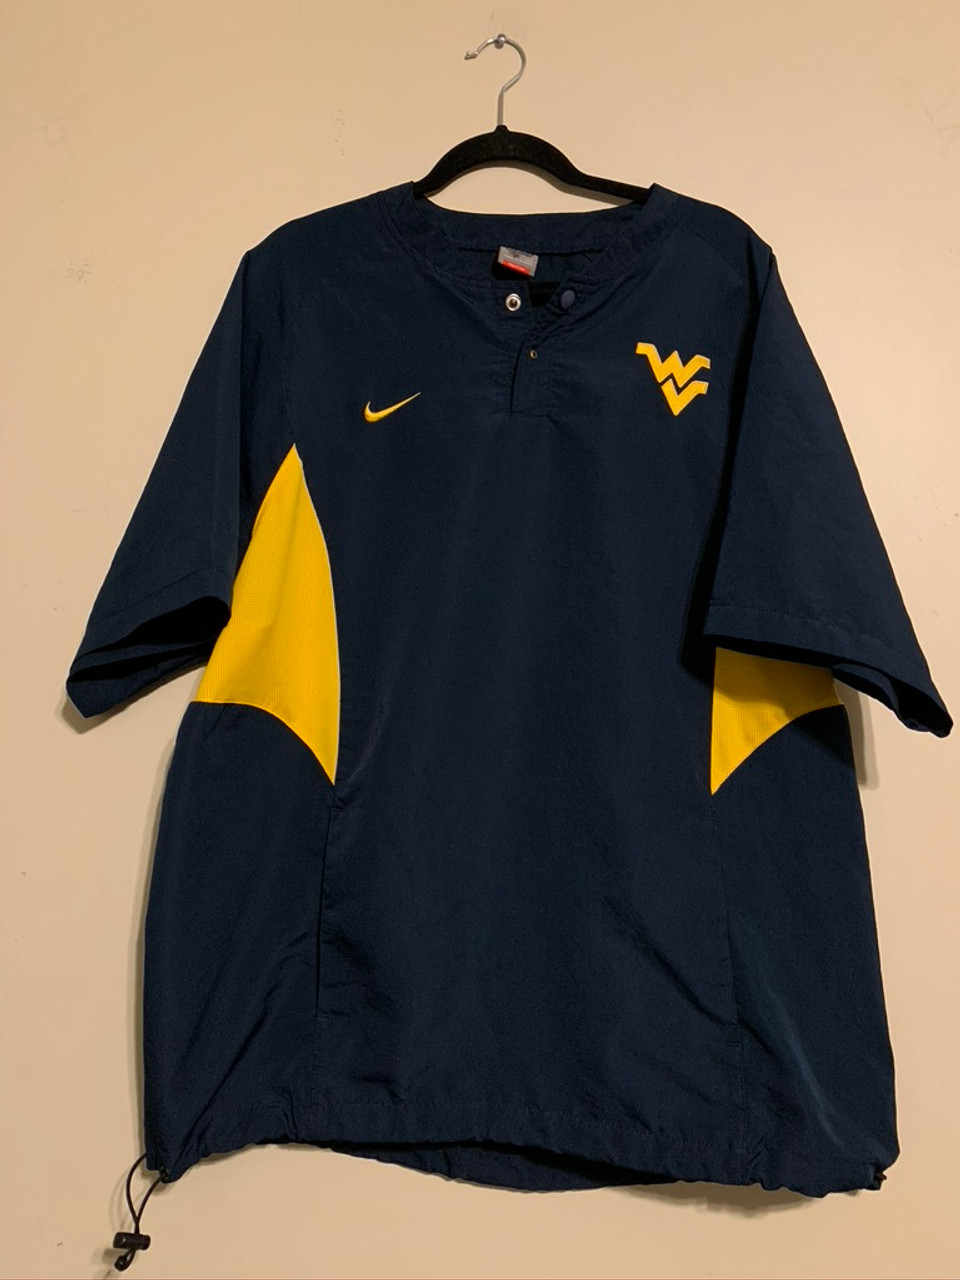 Kan niet lezen of schrijven Afgrond pols Nike Team WV West Virginia University 1/4 Button Short Sleeve Windbreaker  Size Large L